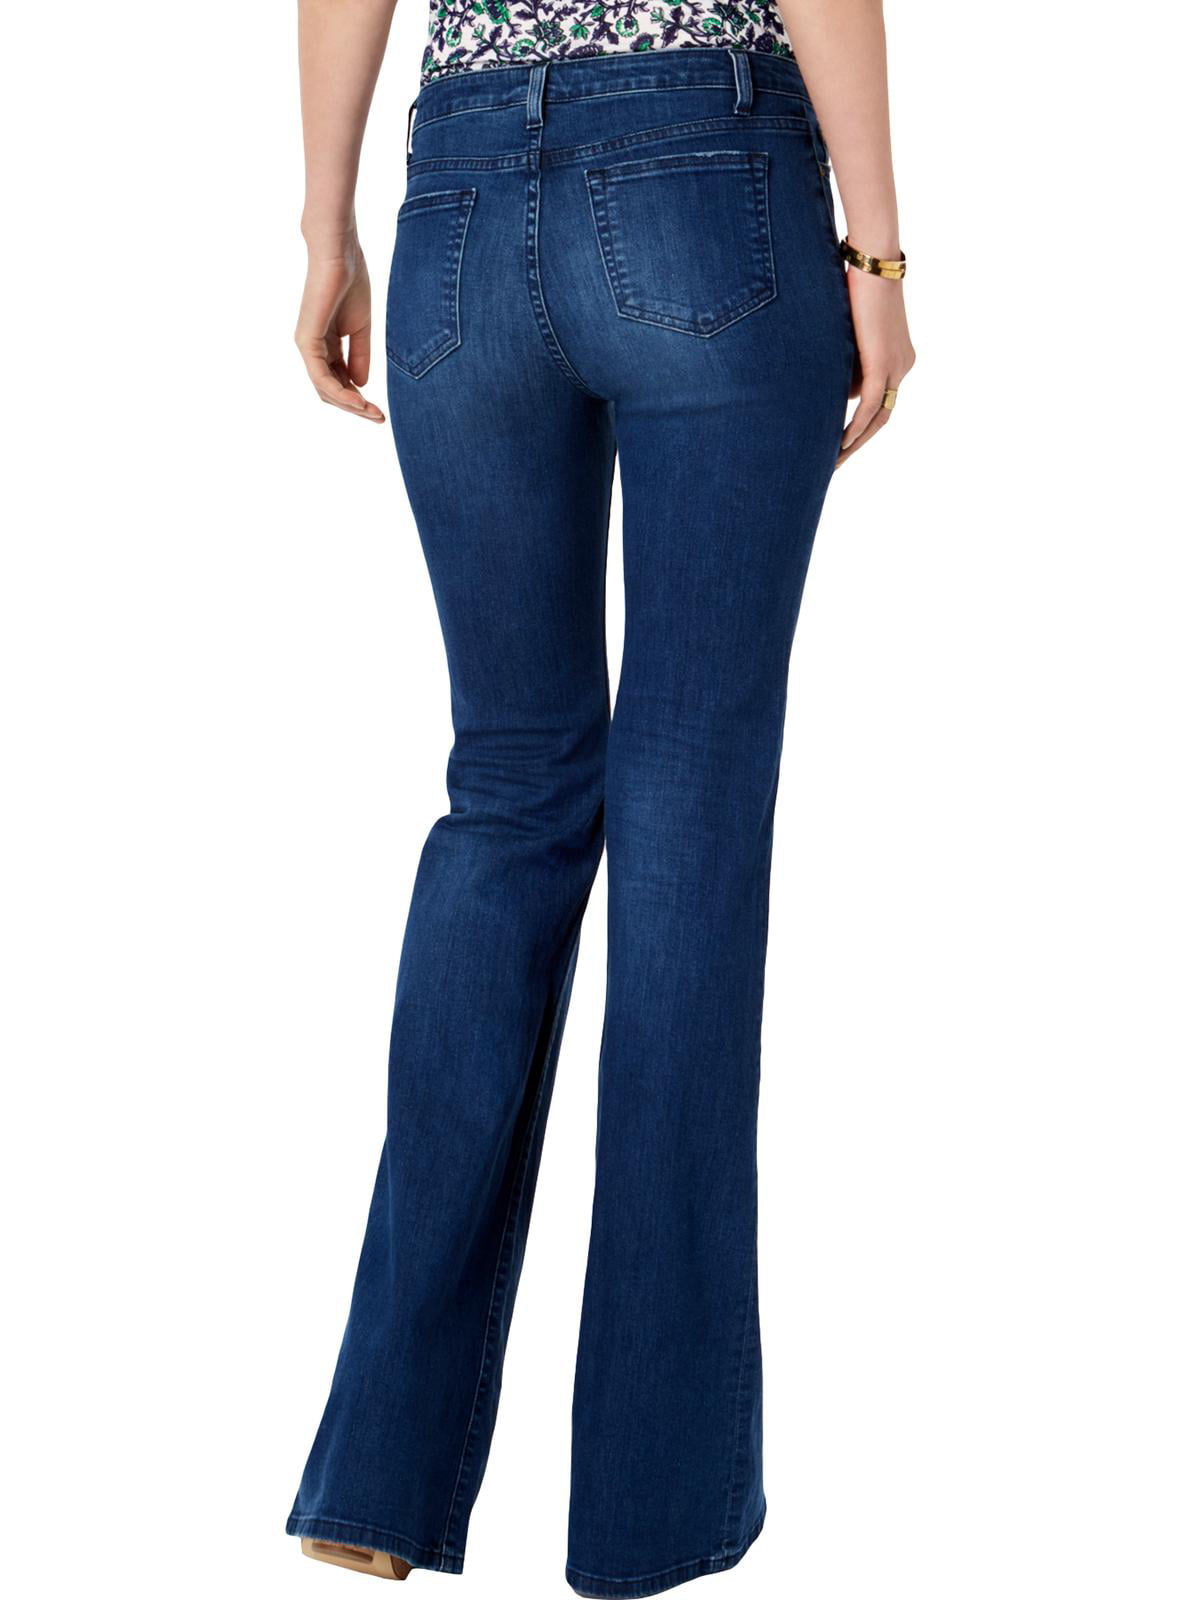 MICHAEL MICHAEL KORS Women Size 10 SKY BLUE jeans